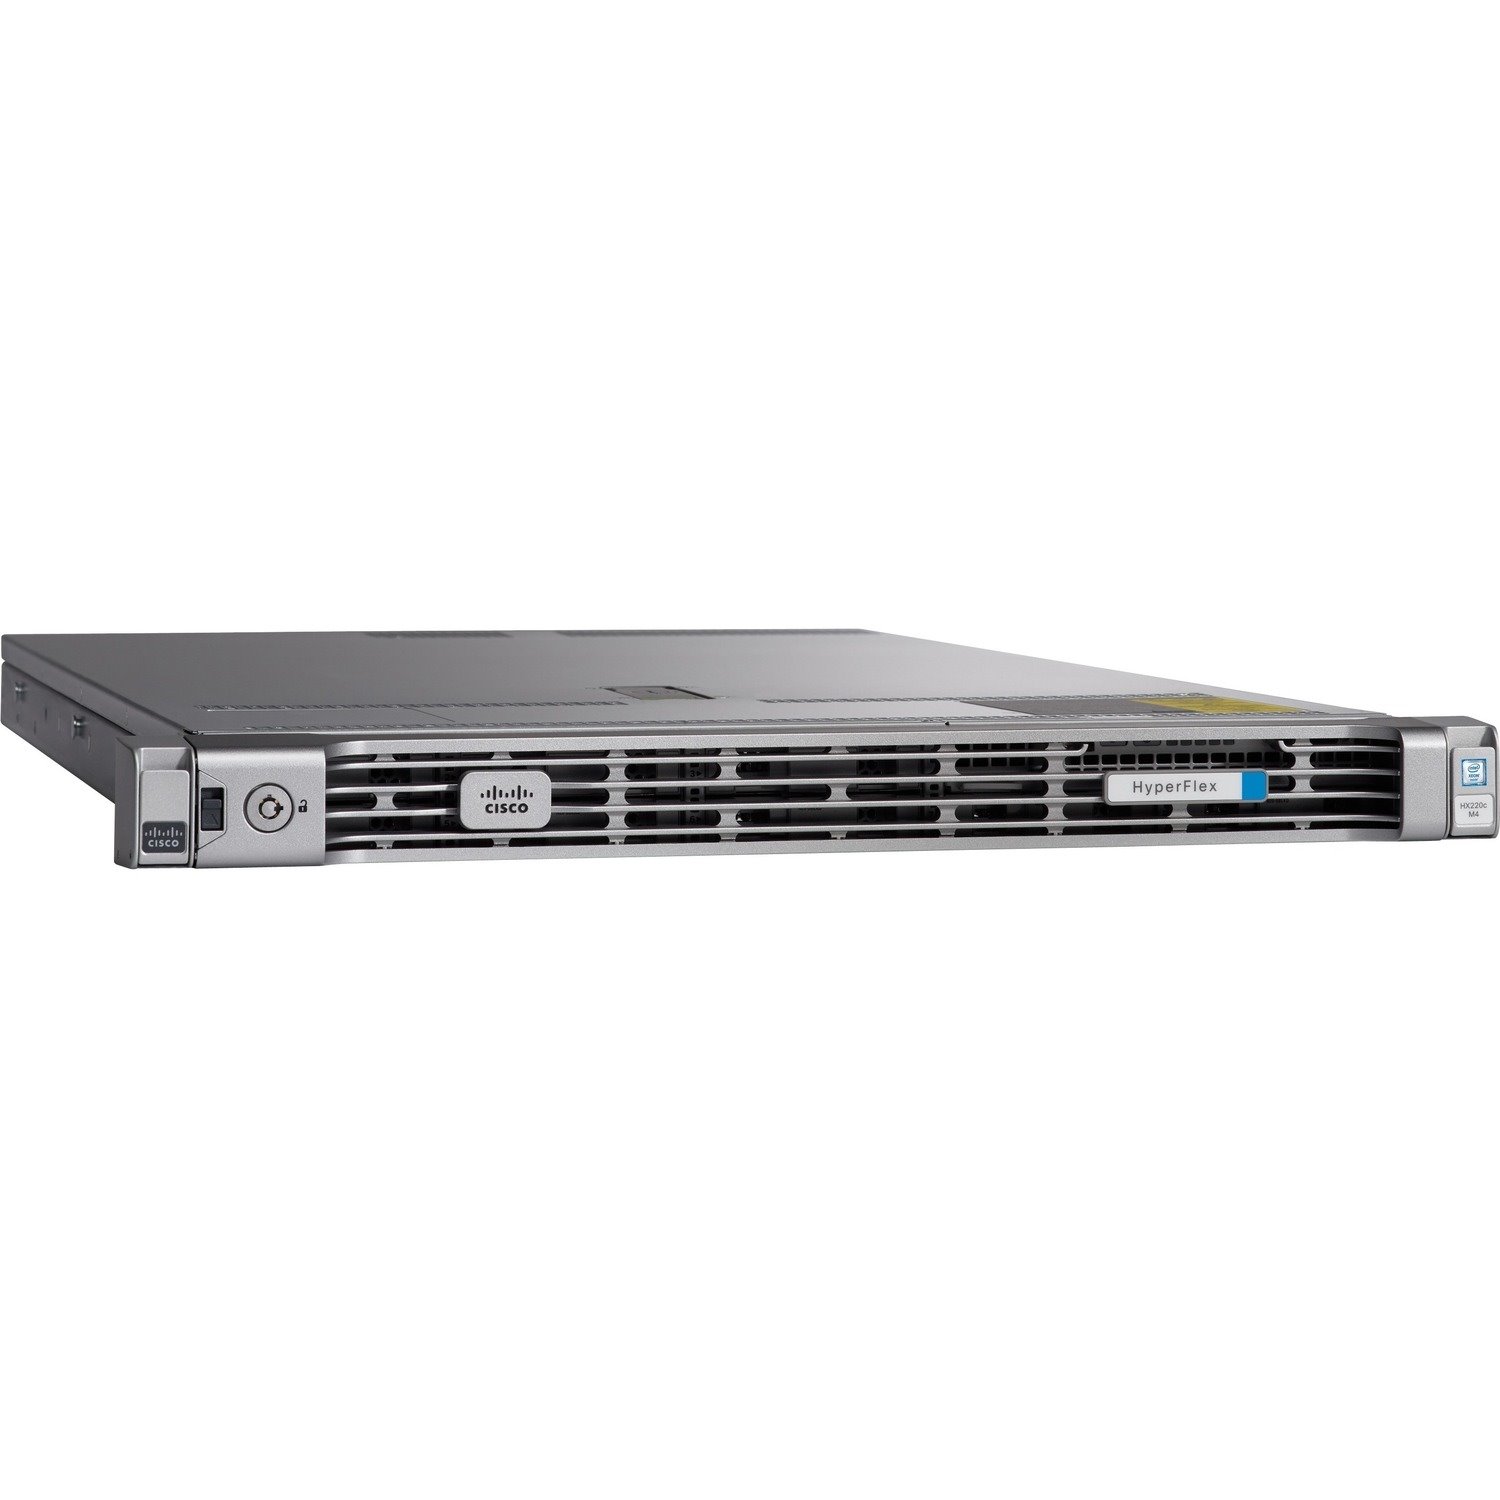 Cisco HyperFlex HX220c M4 1U Rack Server - 2 x Intel Xeon E5-2690 v4 2.60 GHz - 512 GB RAM - 12Gb/s SAS Controller